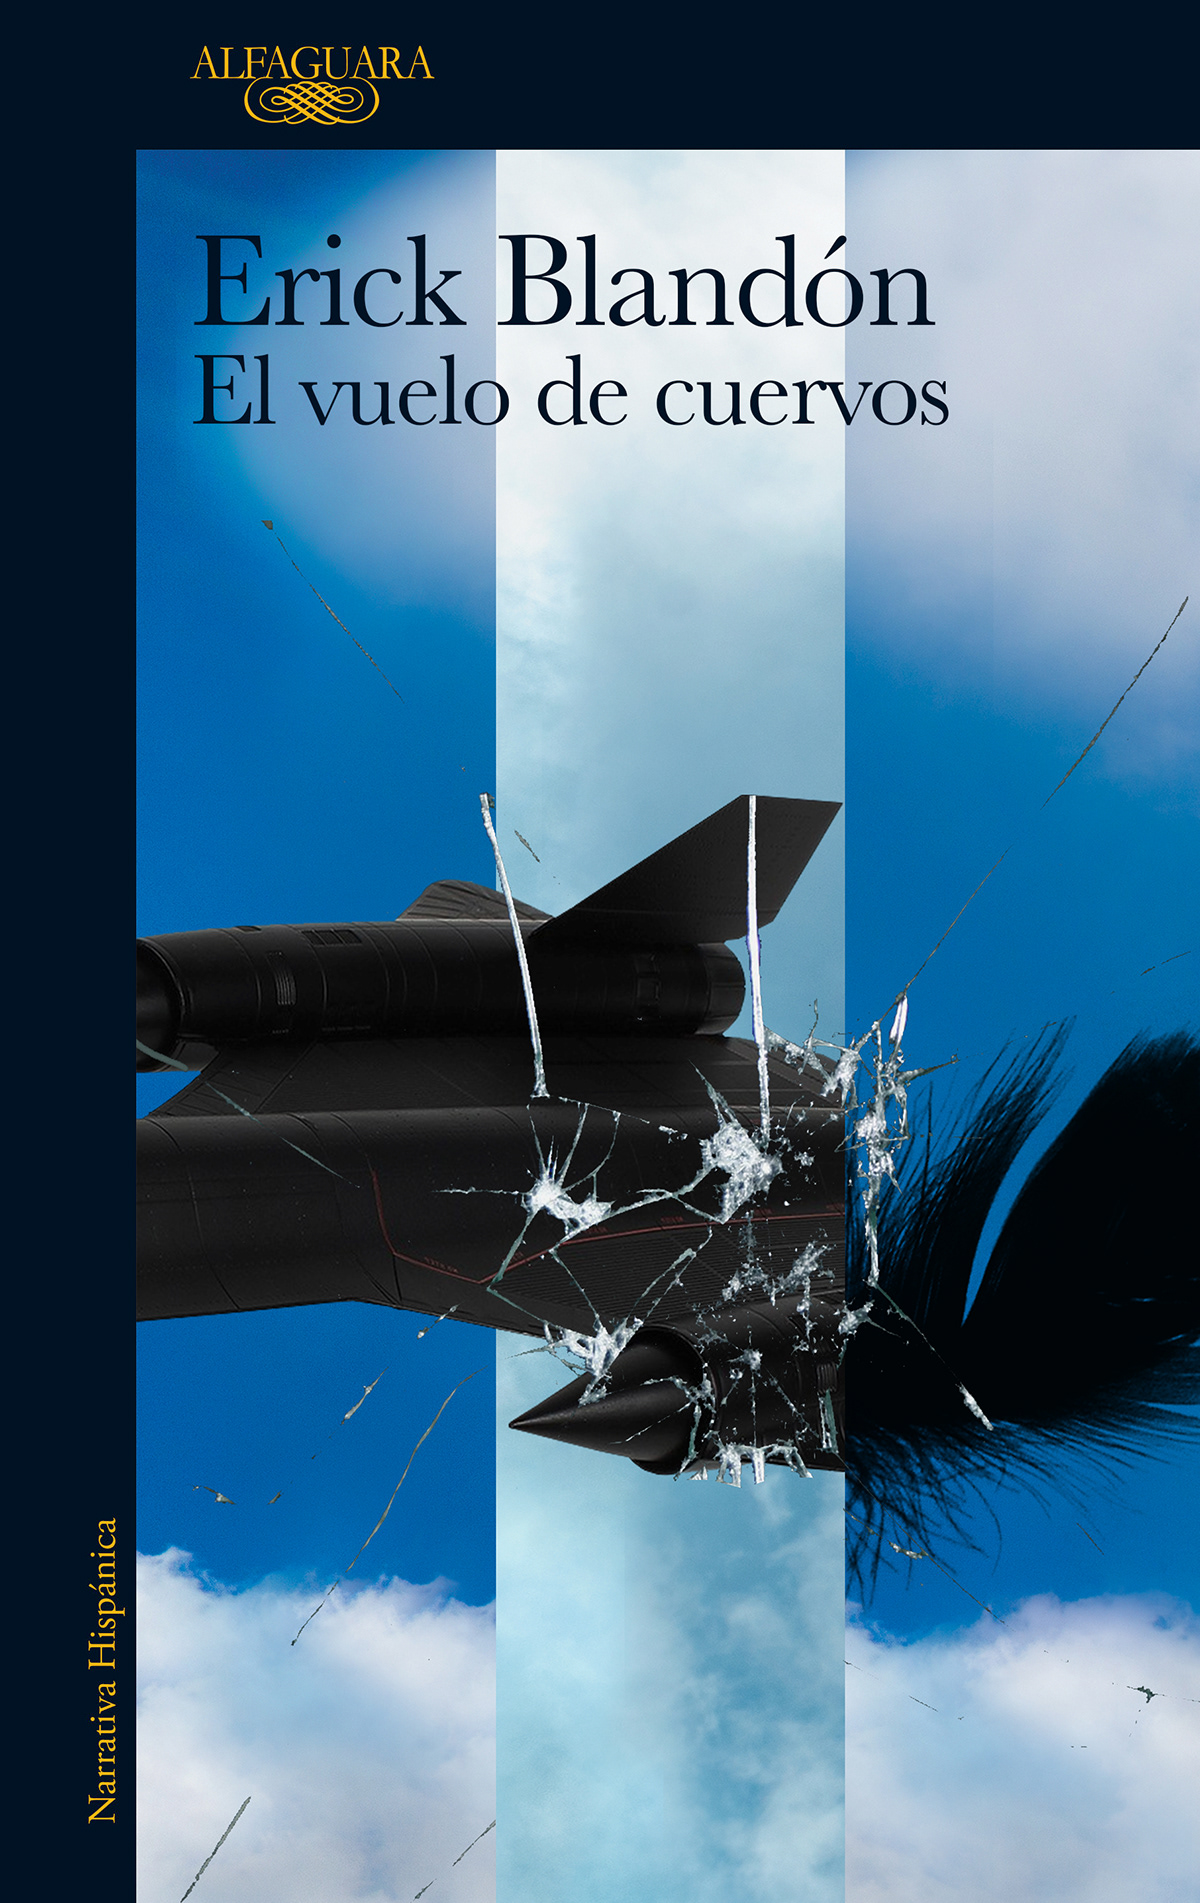 graphic design editorial book cover creative nicaragua abstract conceptual